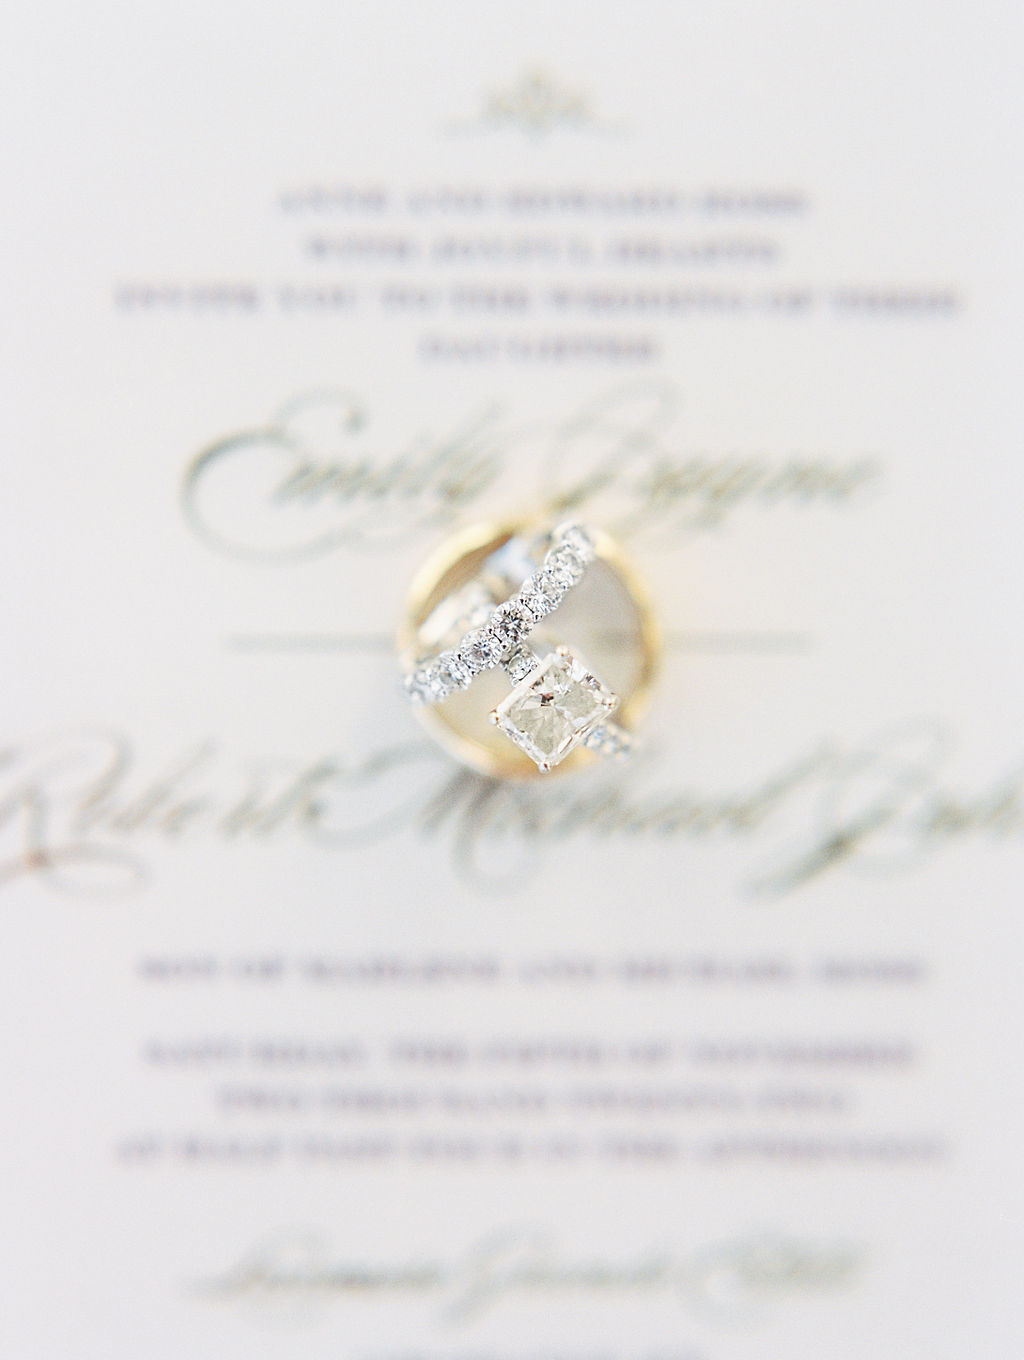 bride and groom wedding rings on blurred invitation